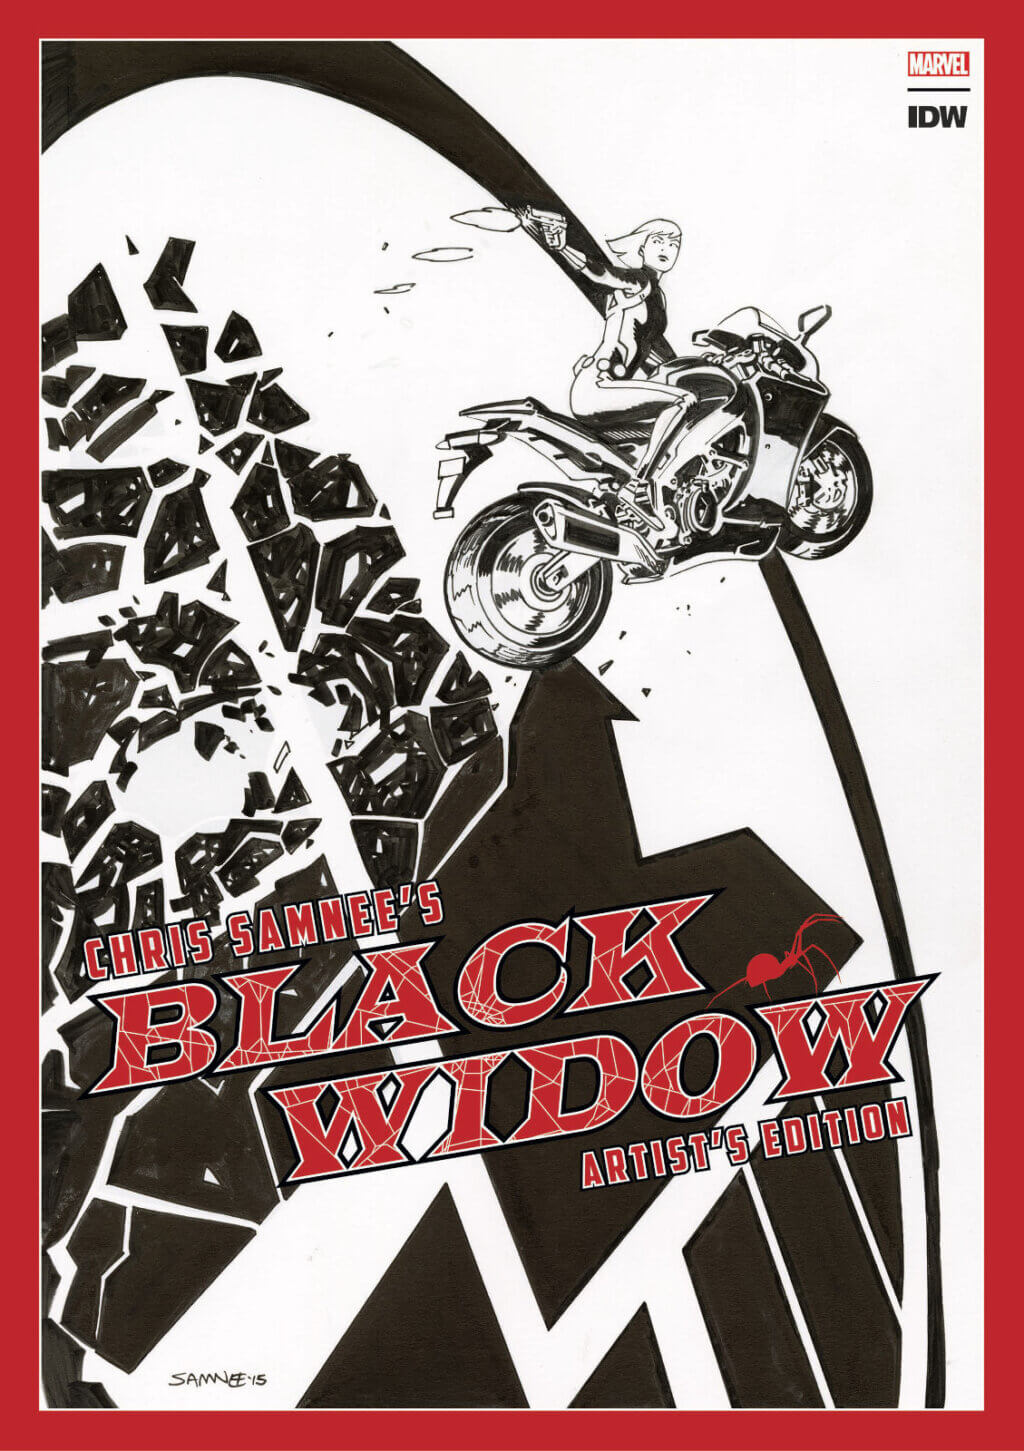 Chris Samnee's Black Widow Artists Edition cover